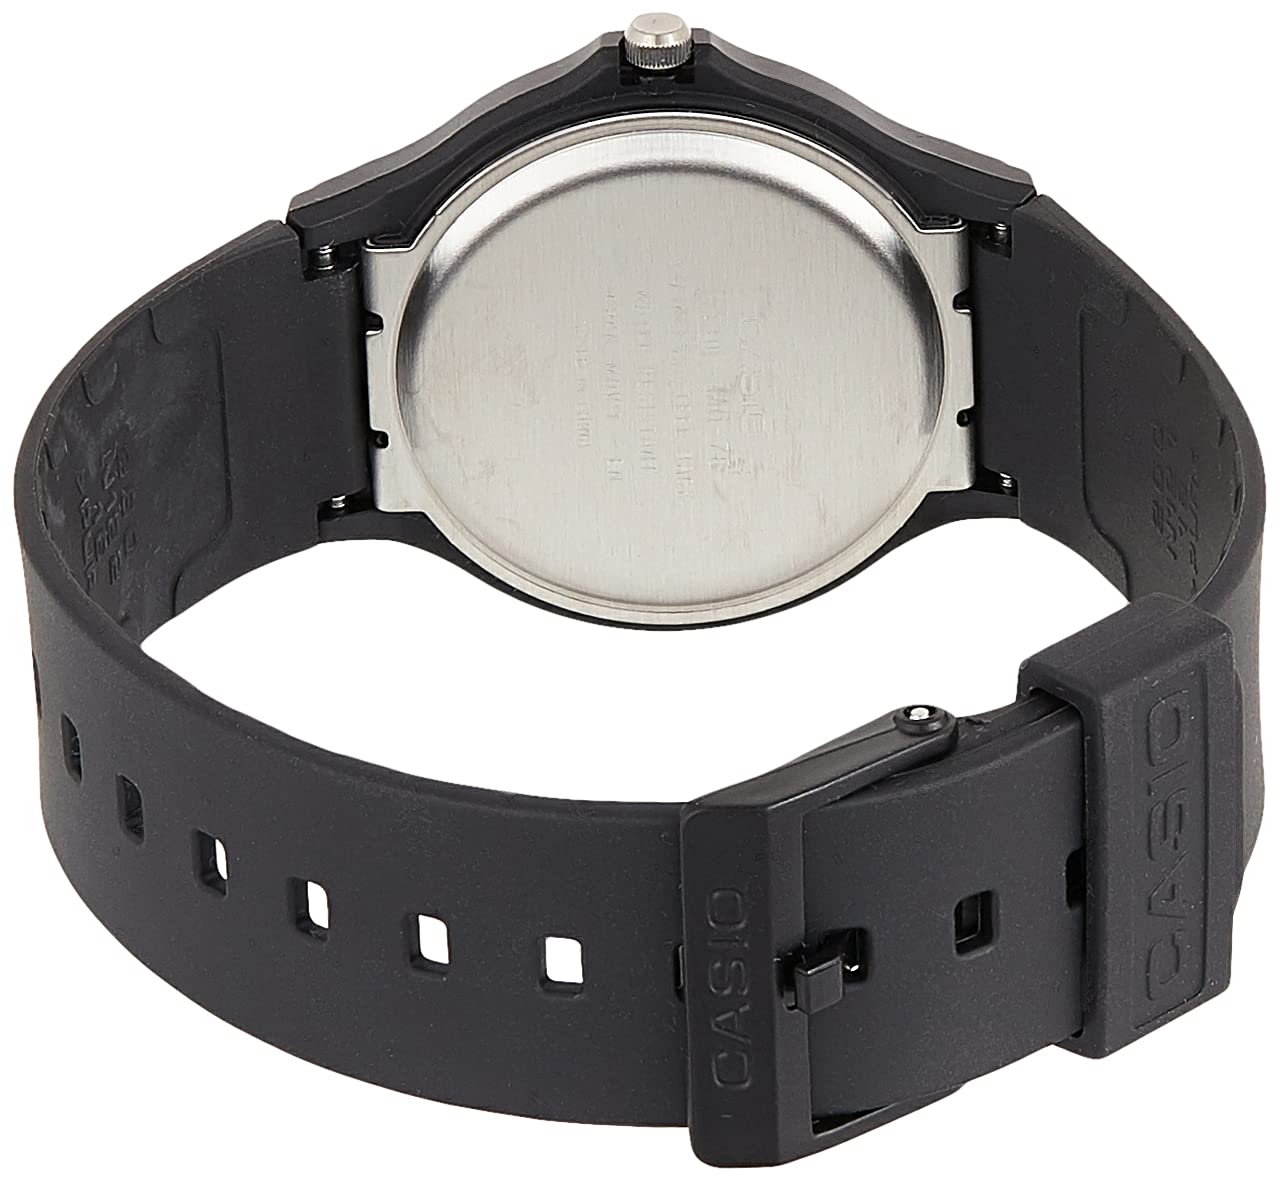 Casio Men's MQ76-2A Black Resin Quartz Watch with Blue Dial